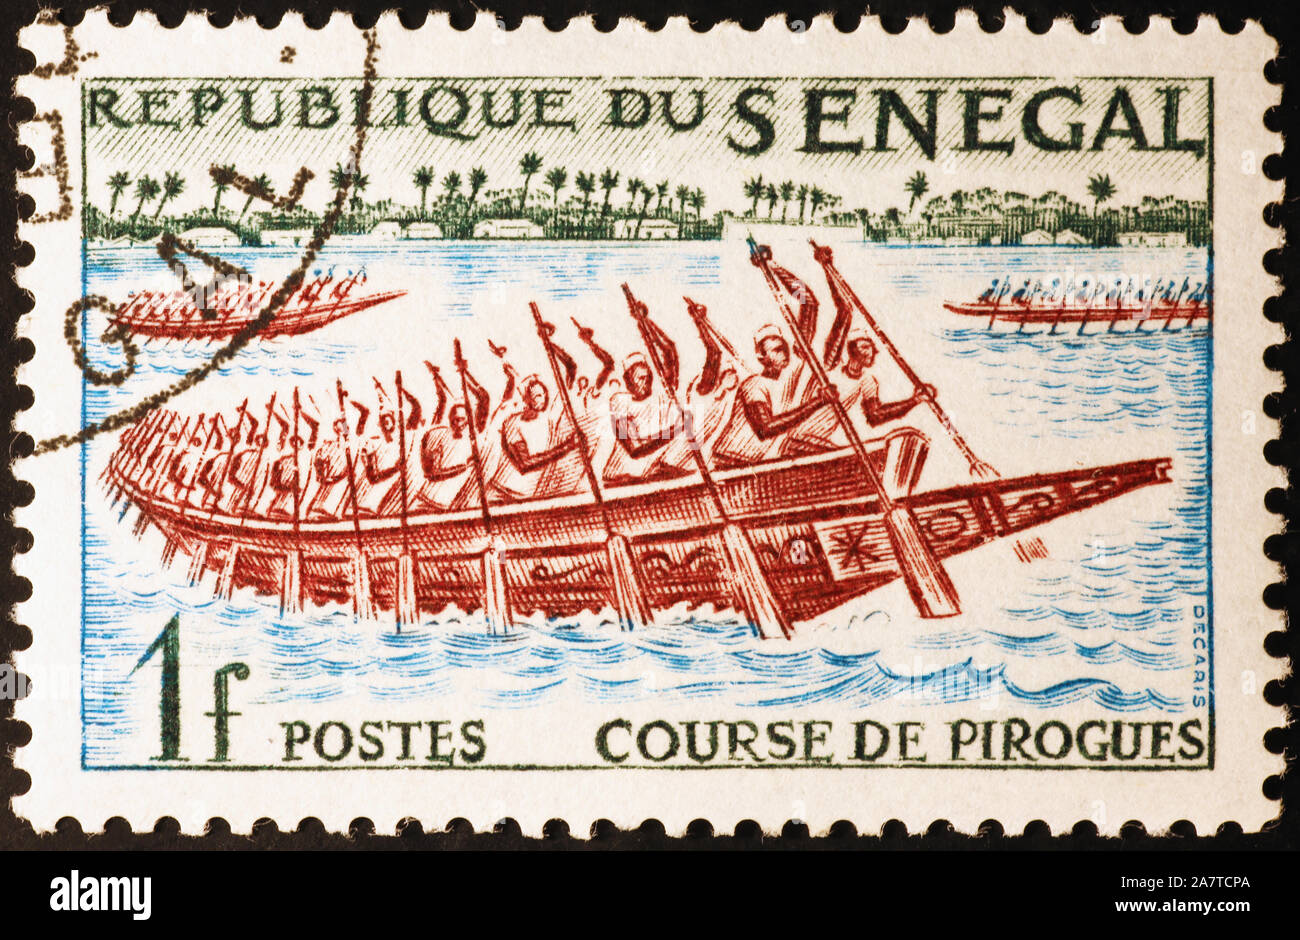 Race of piraguas on postage stamp of Senegal Stock Photo